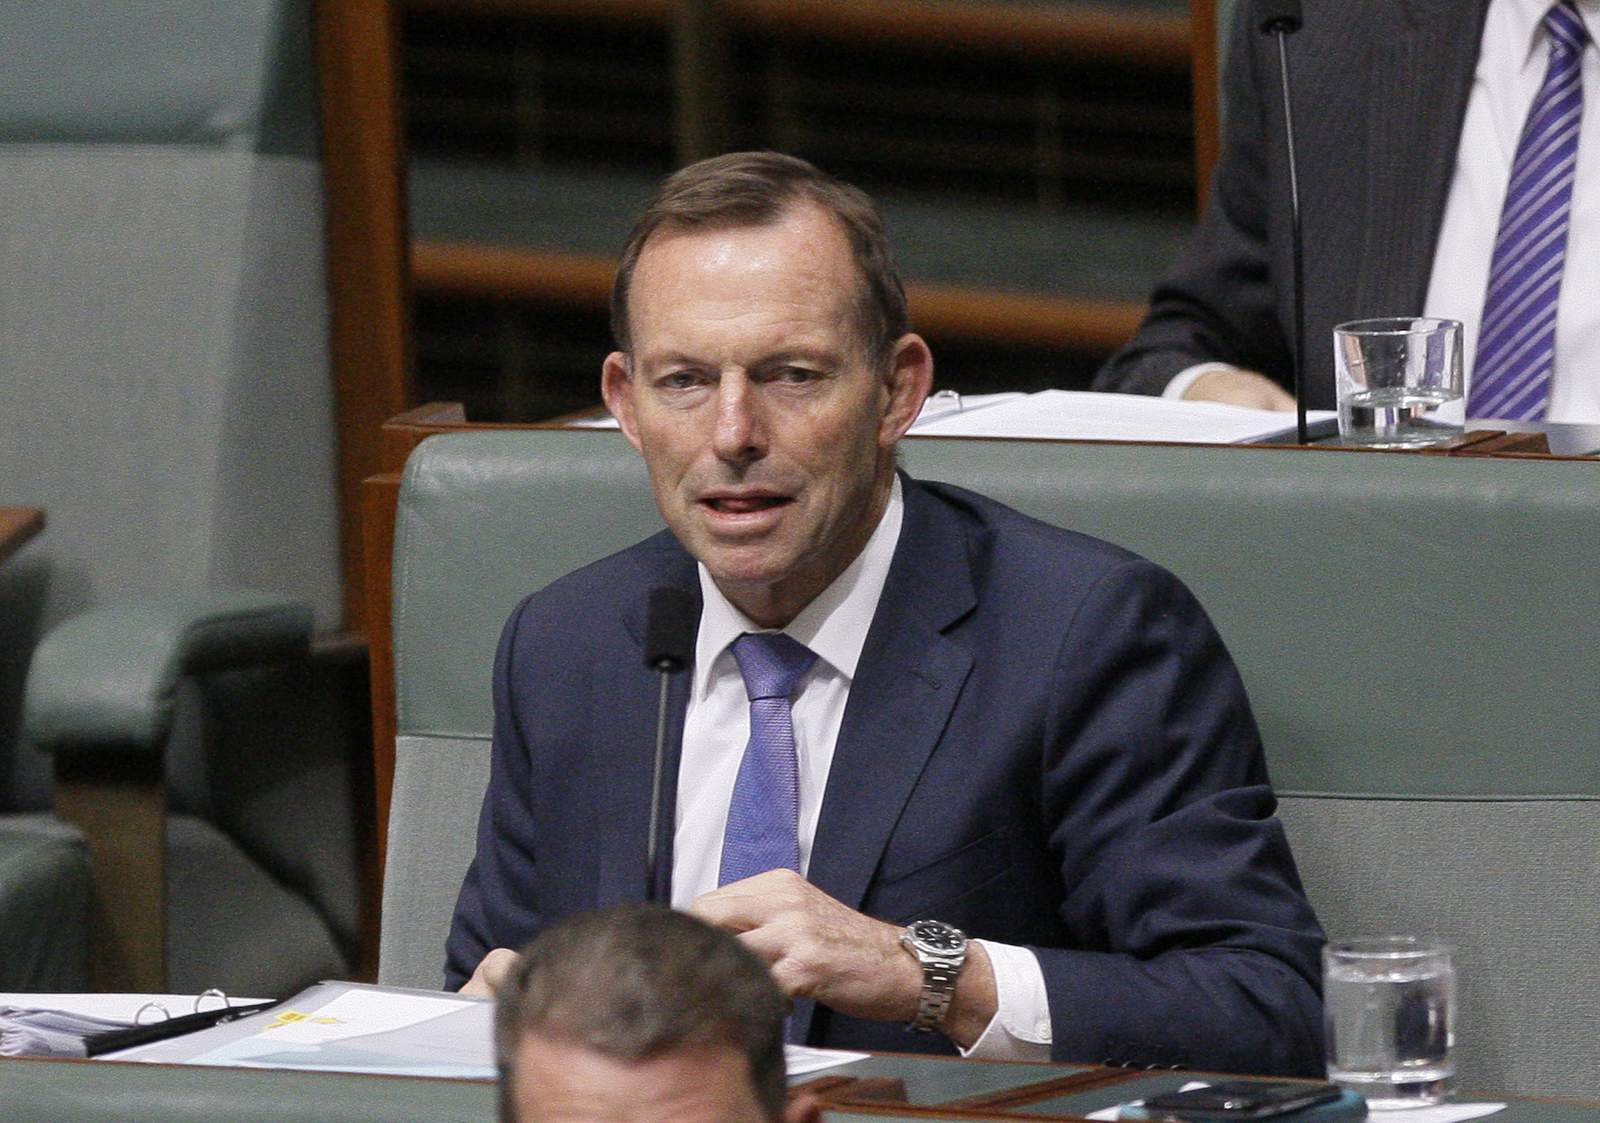 UK urged to drop ex-Australia PM Abbott from trade envoy job